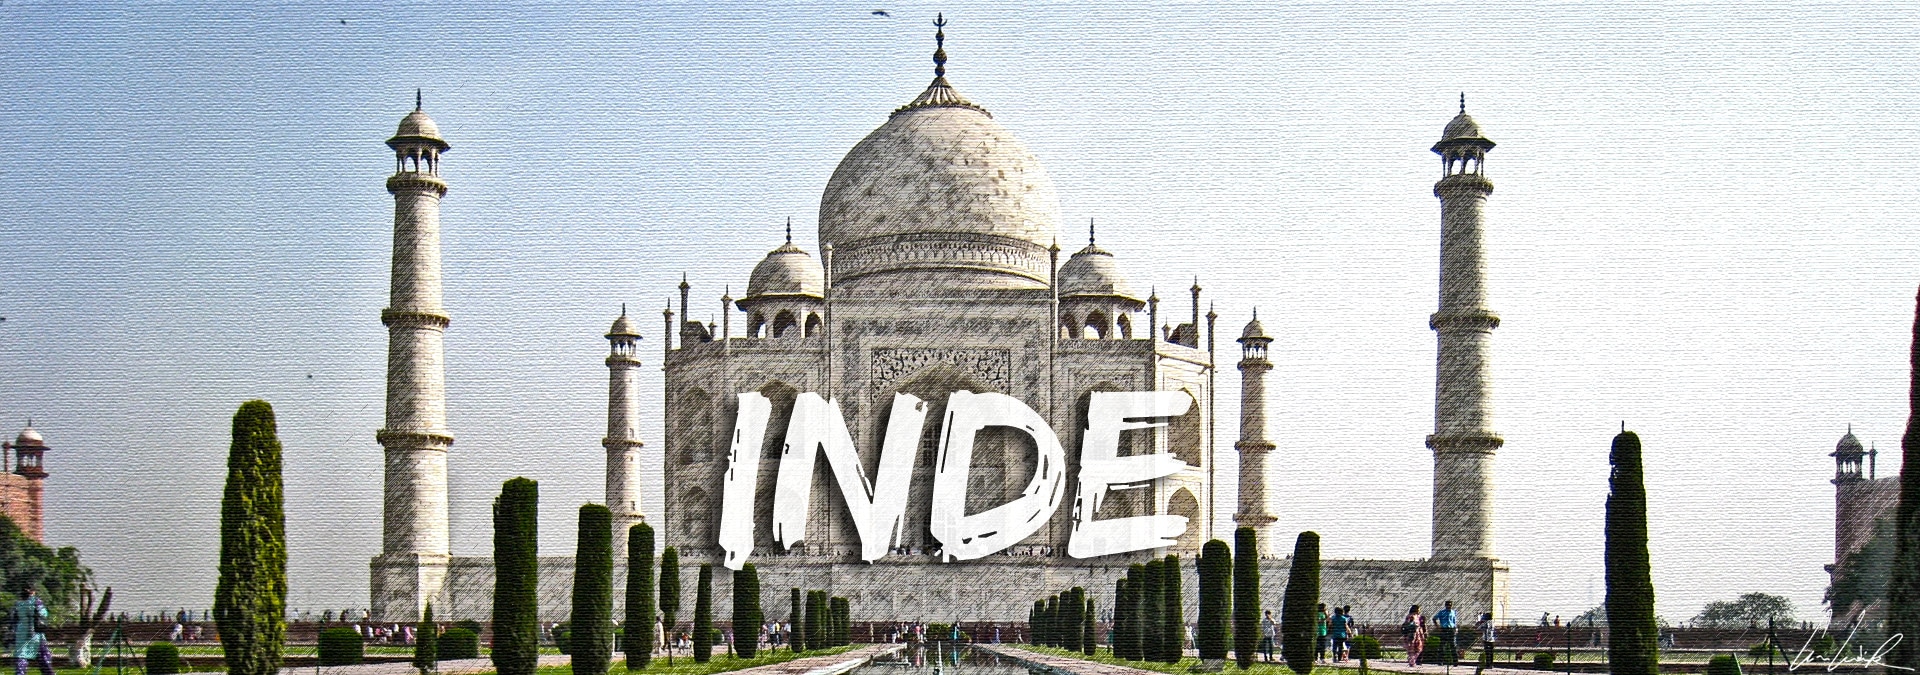 C-Ludik - Pays visité : Inde